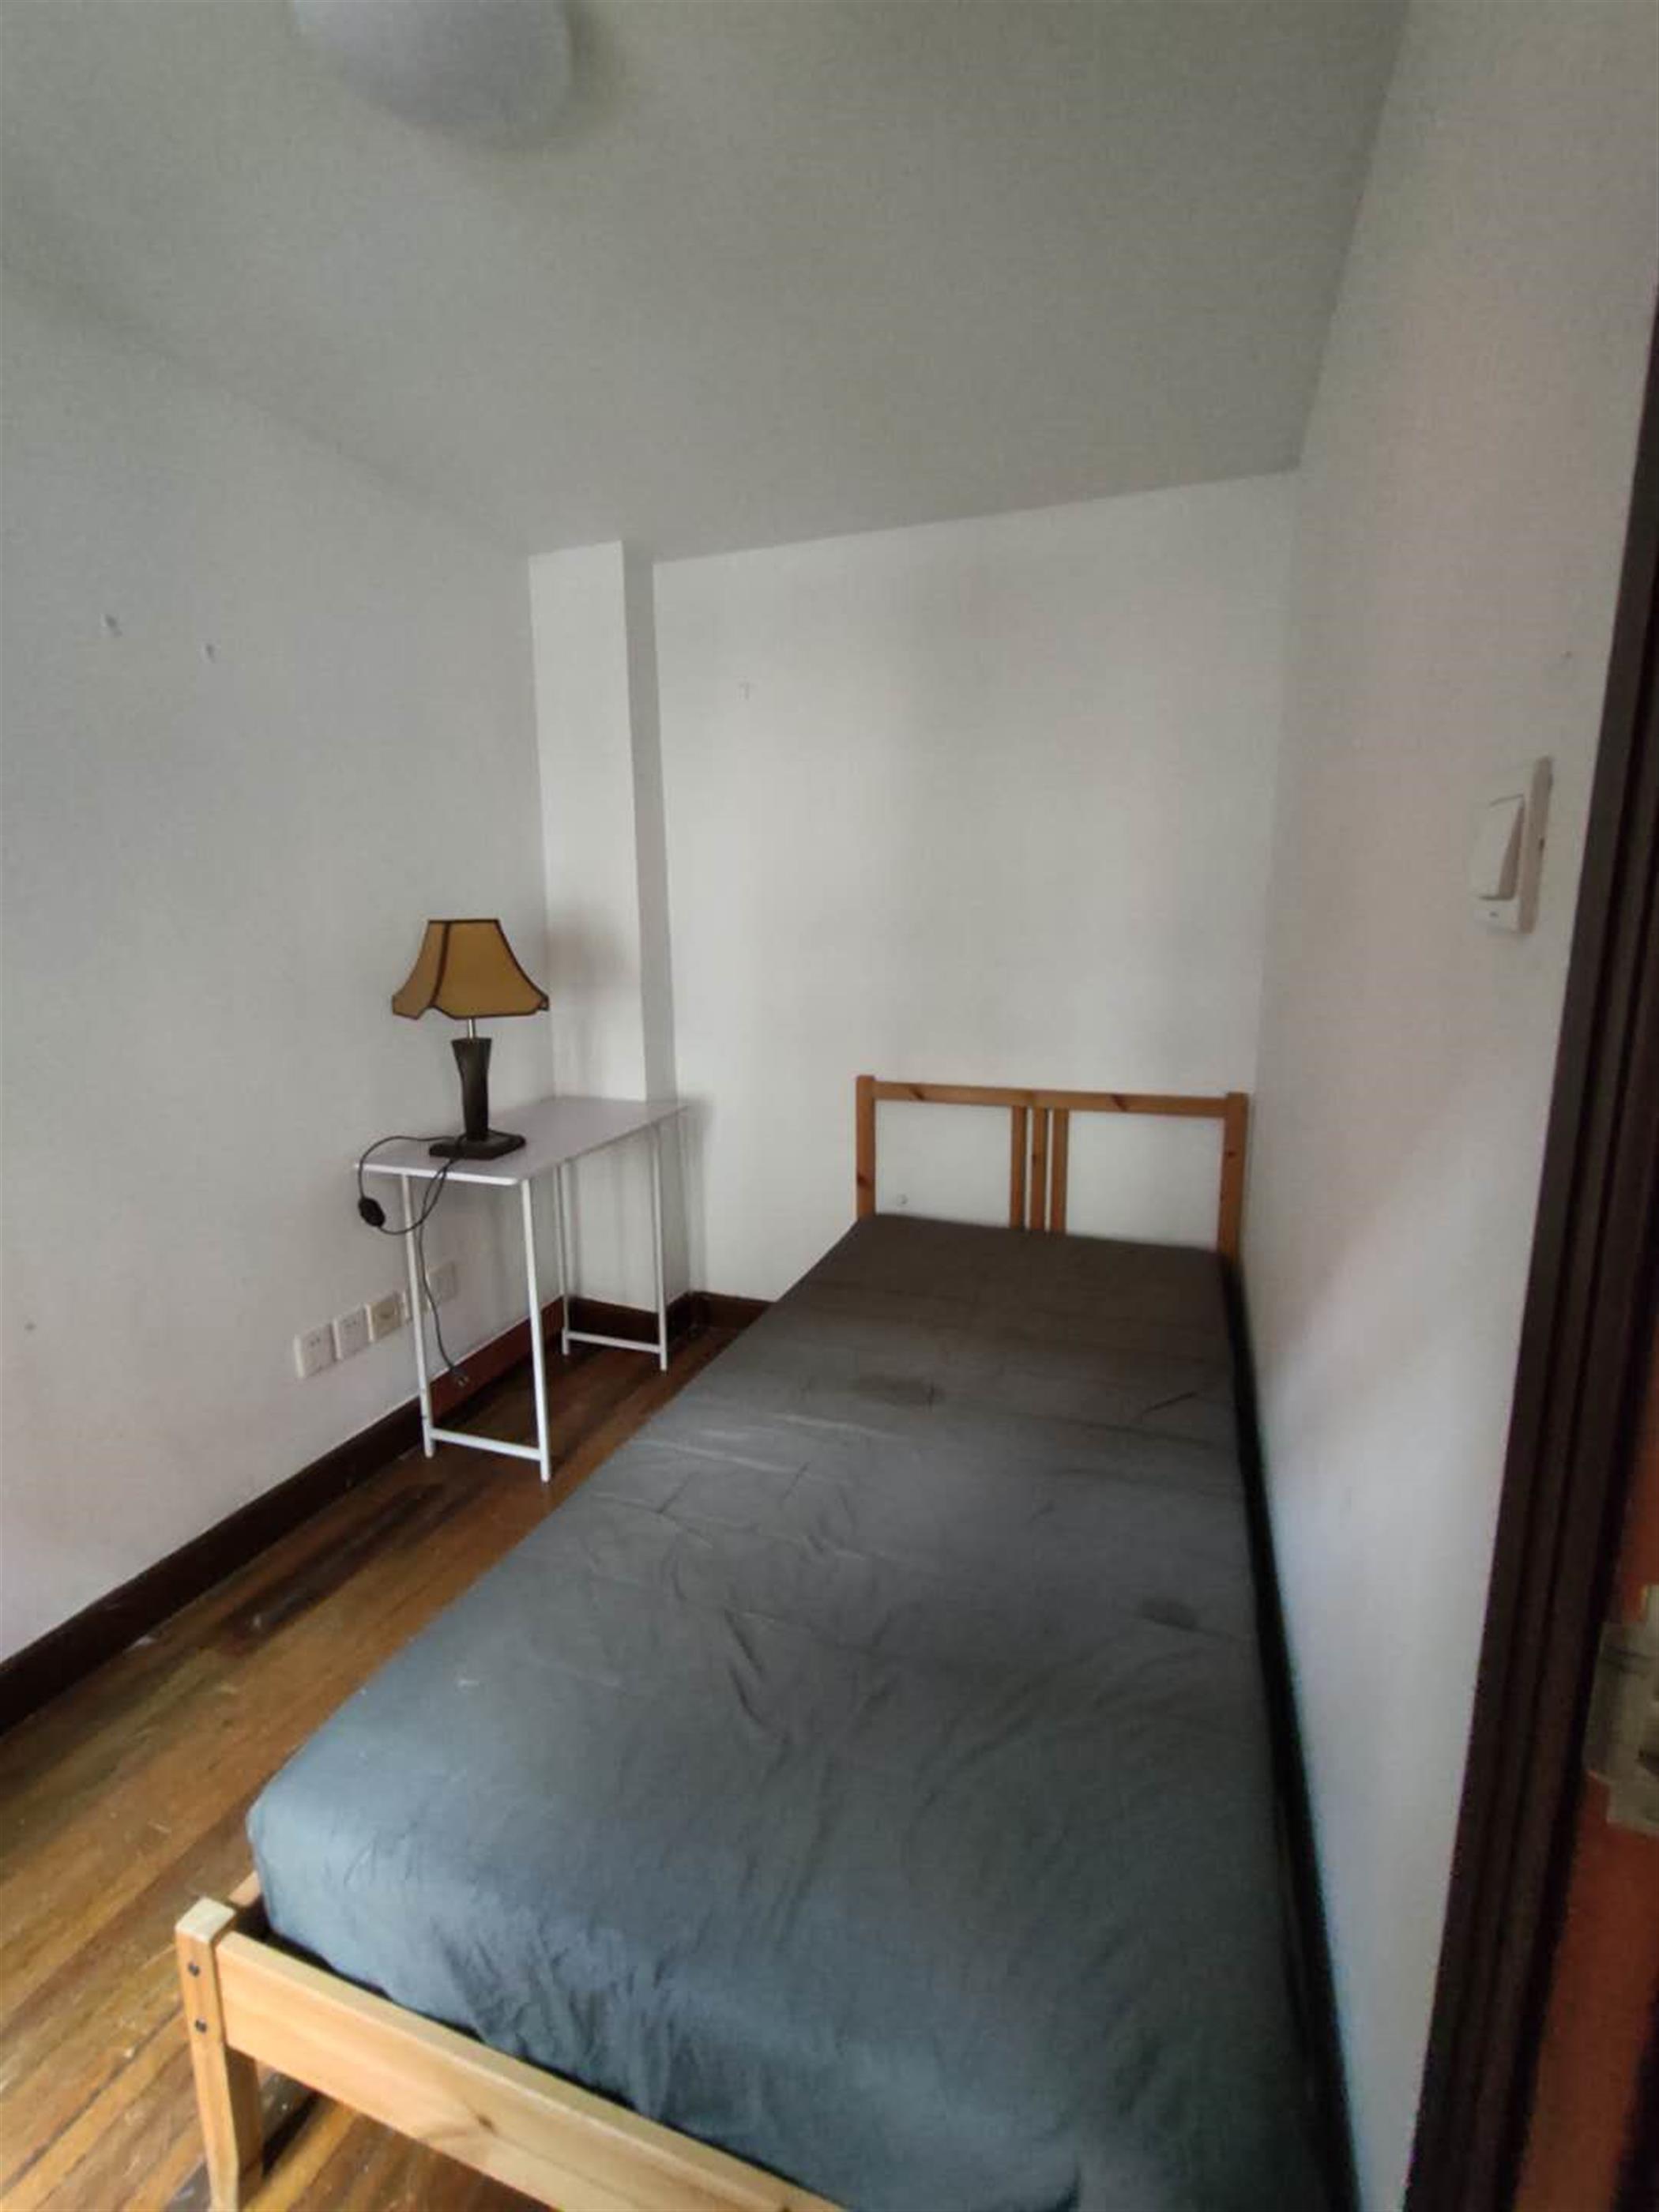 extra bedroom 3-Floor 3BR Lane House Nr Ln 2/12/13 for Rent in Shanghai